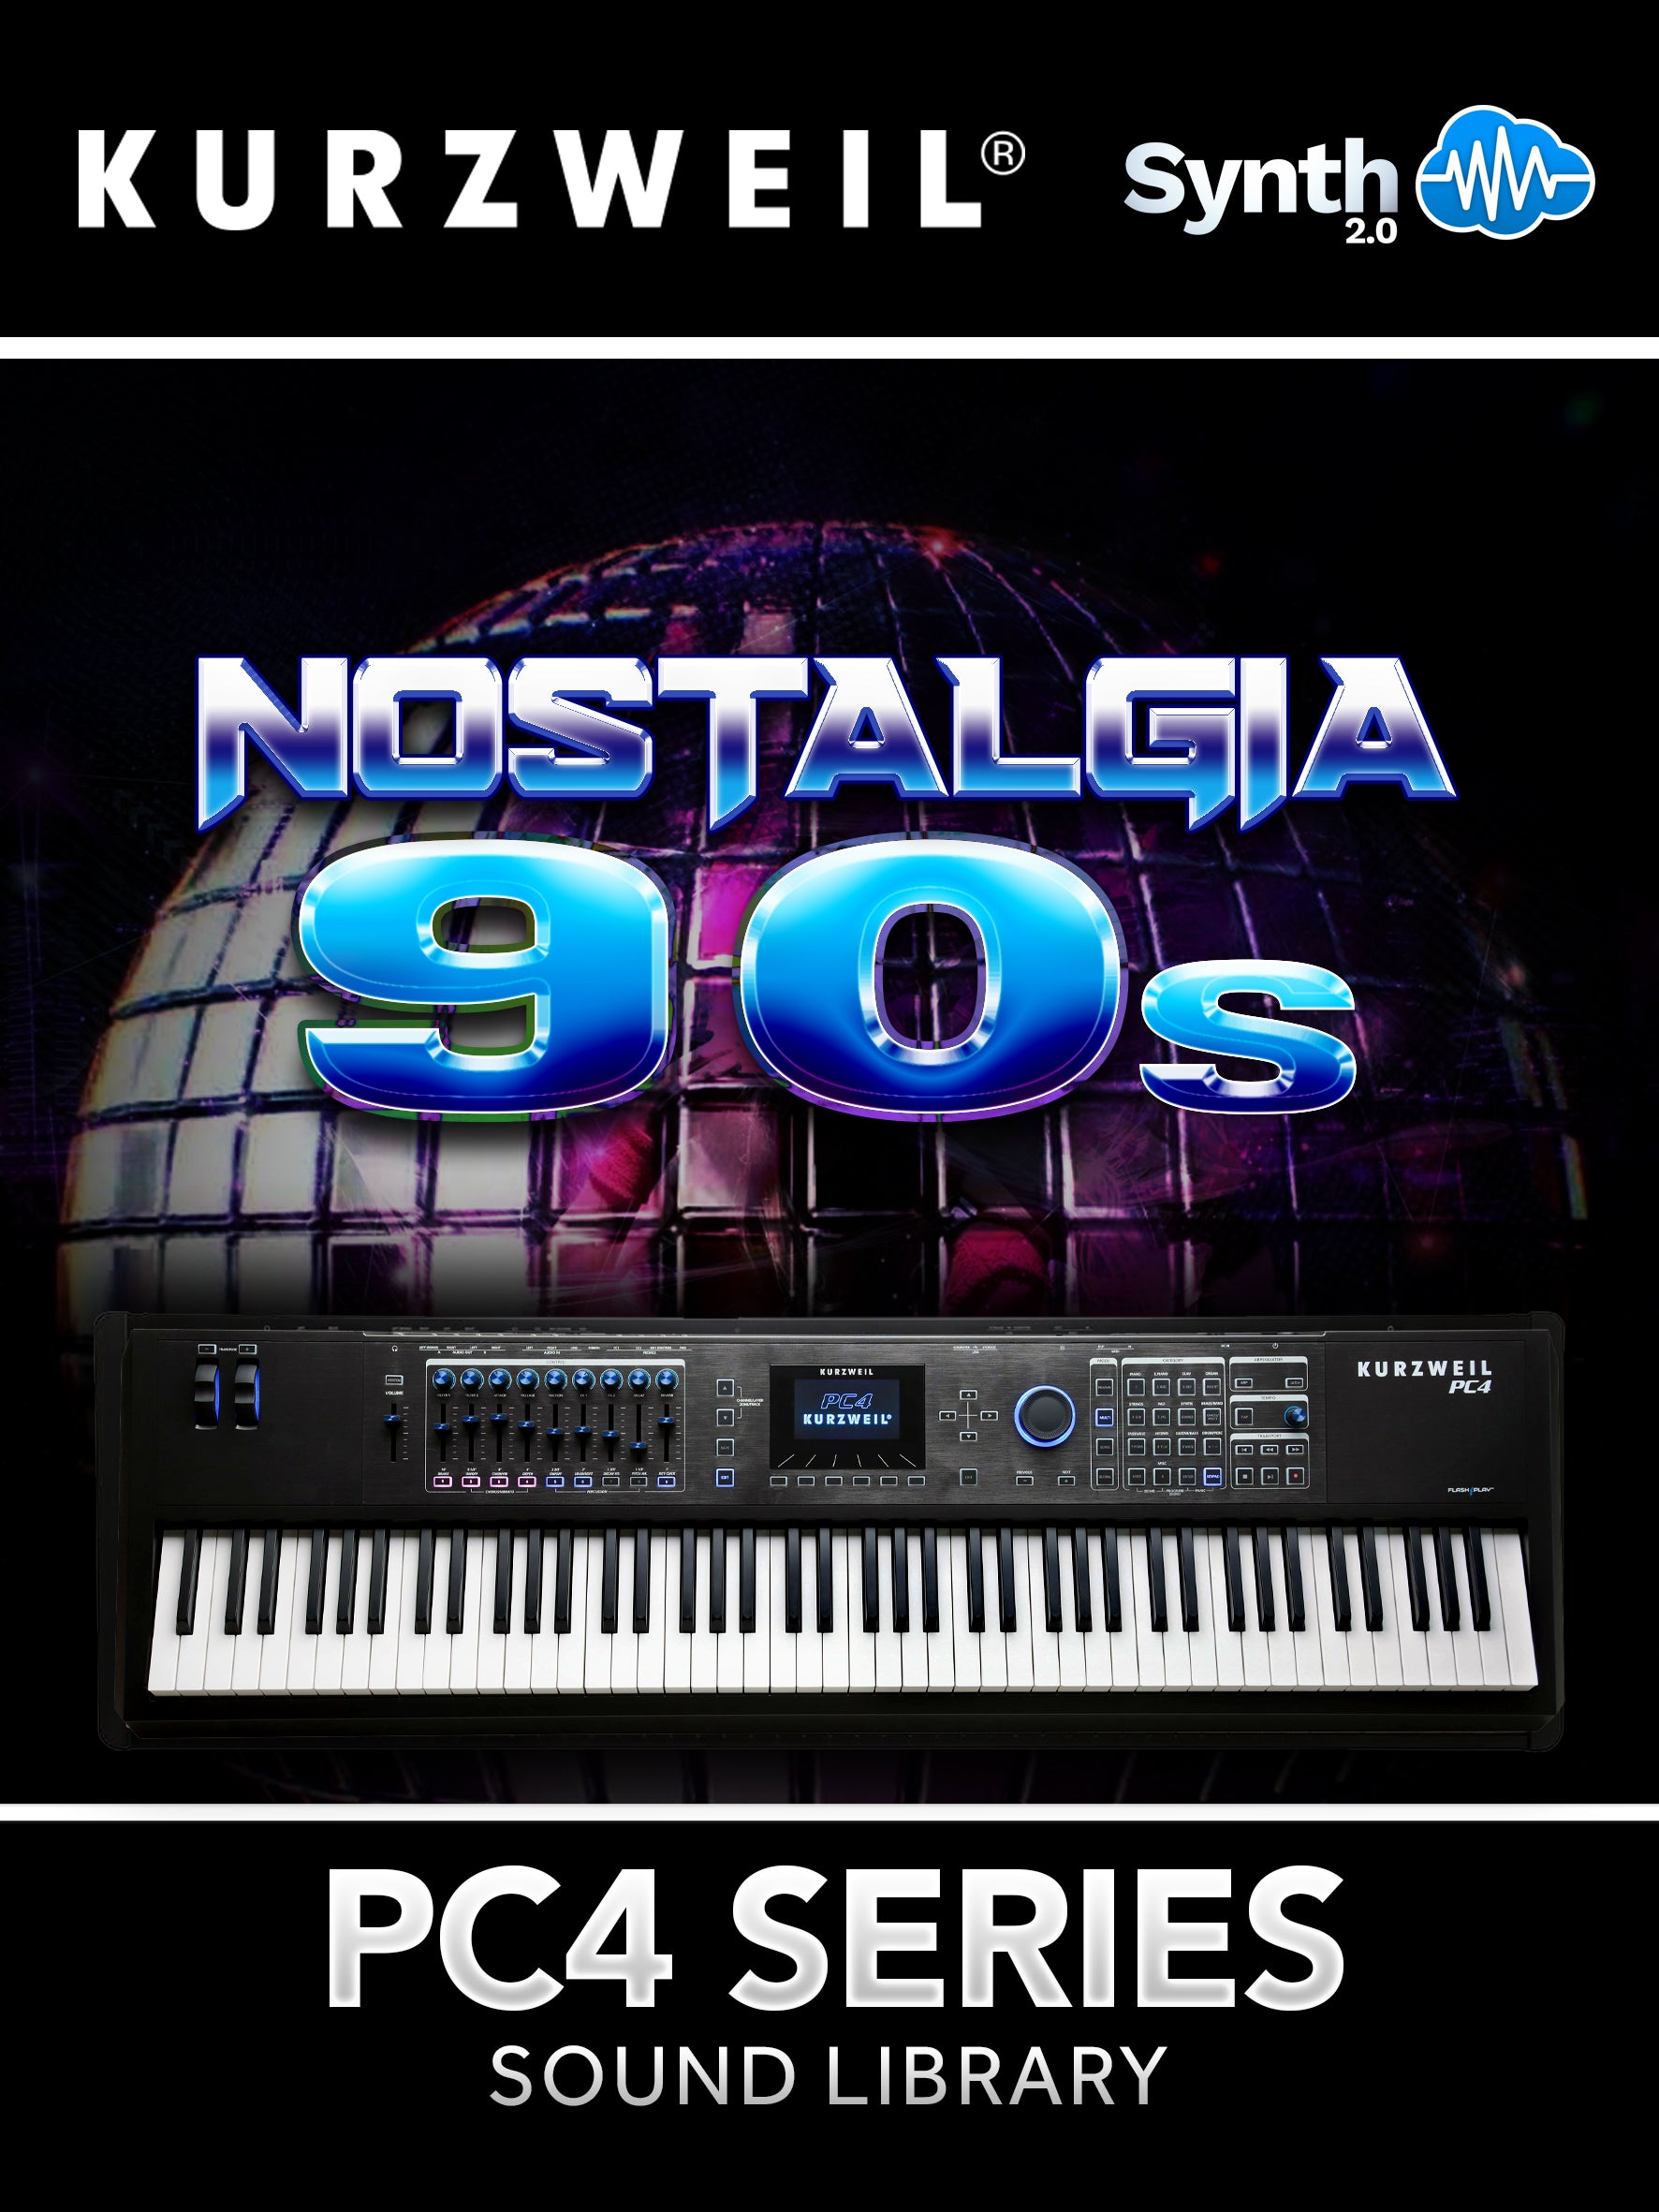 PC4036 - SC Sounds Free Vol.9 - Nostalgia 90 - Kurzweil PC4 Series ( 14 presets )